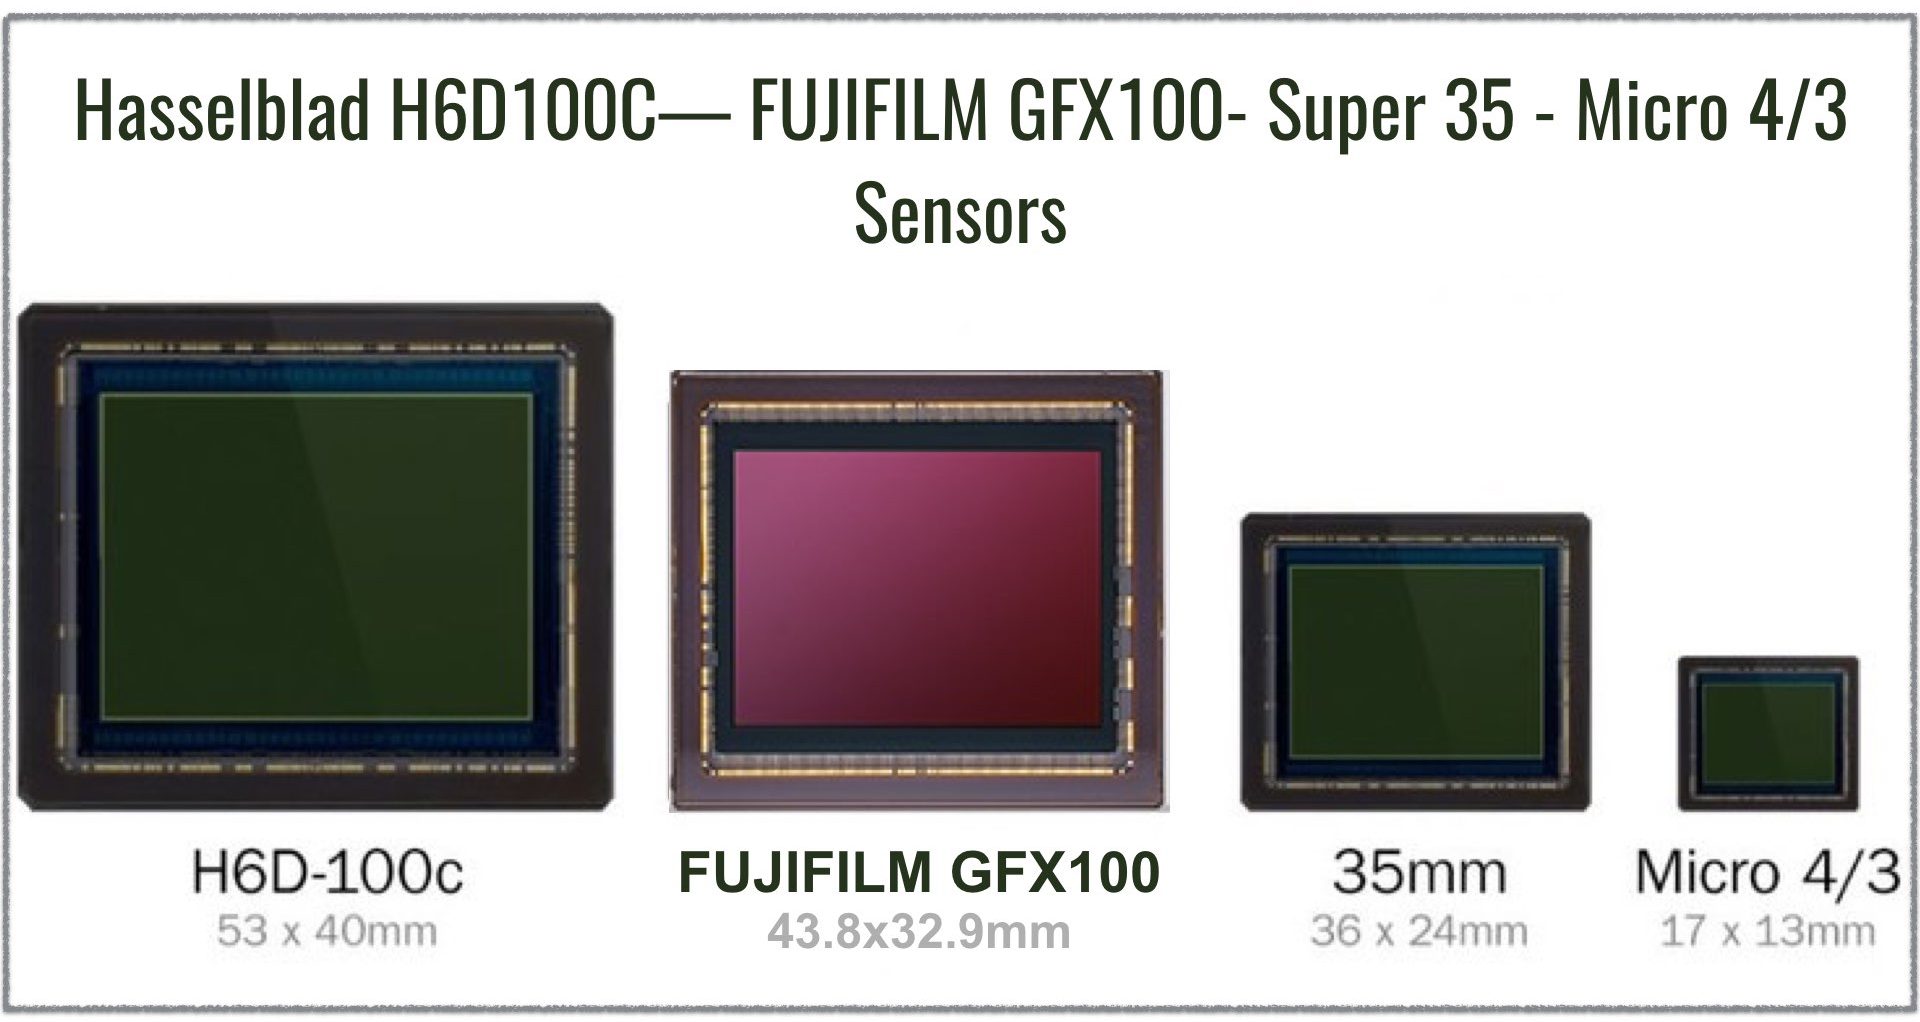 Hasselblad H6D100C— FUJIFILM GFX100- Super 35 - Micro 4/3 Sensors